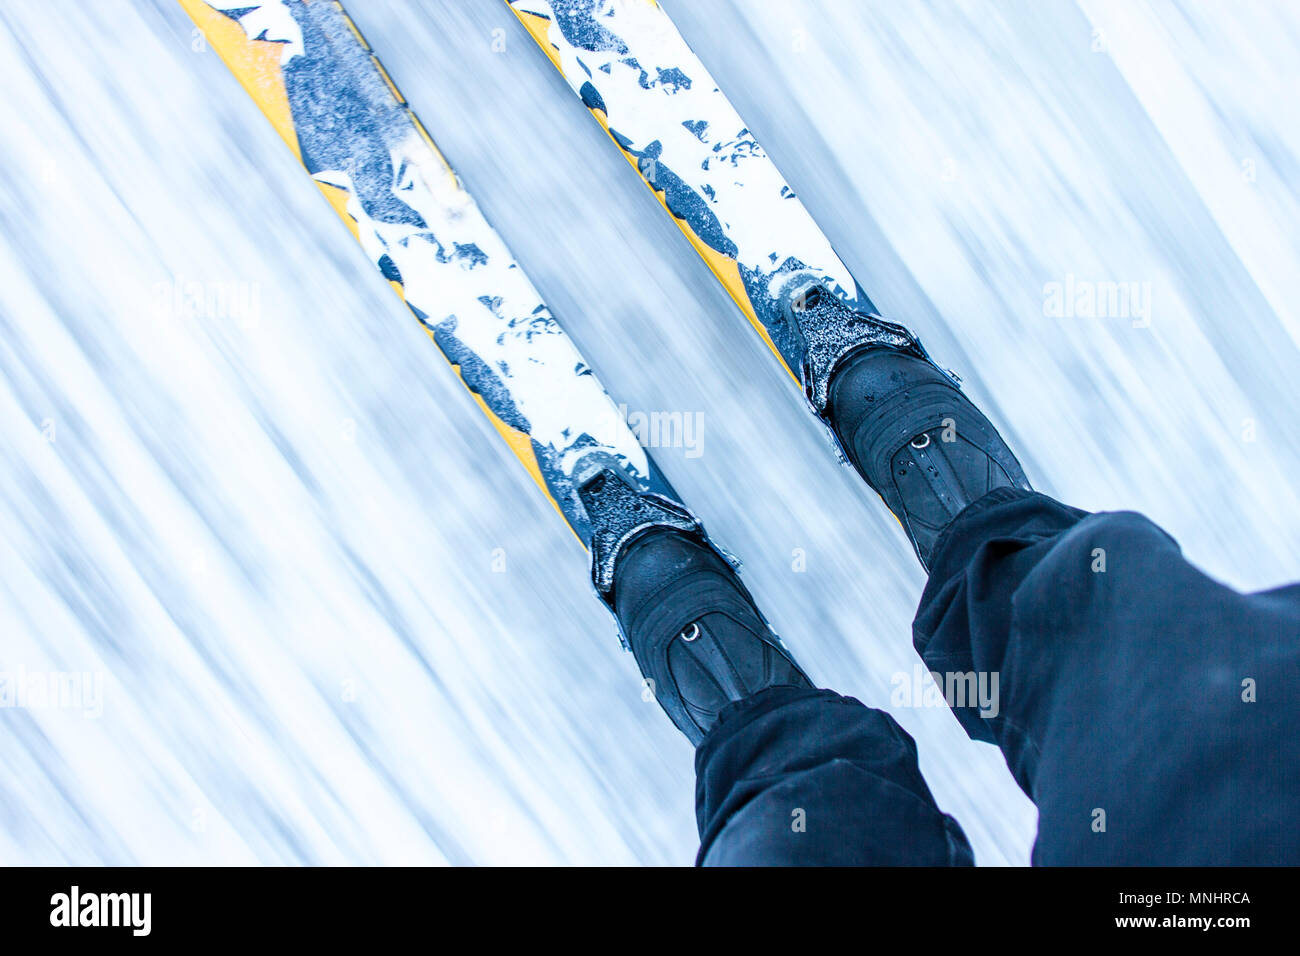 Directly above view of skis of skier sliding on snow, Missoula, Montana, USA Stock Photo